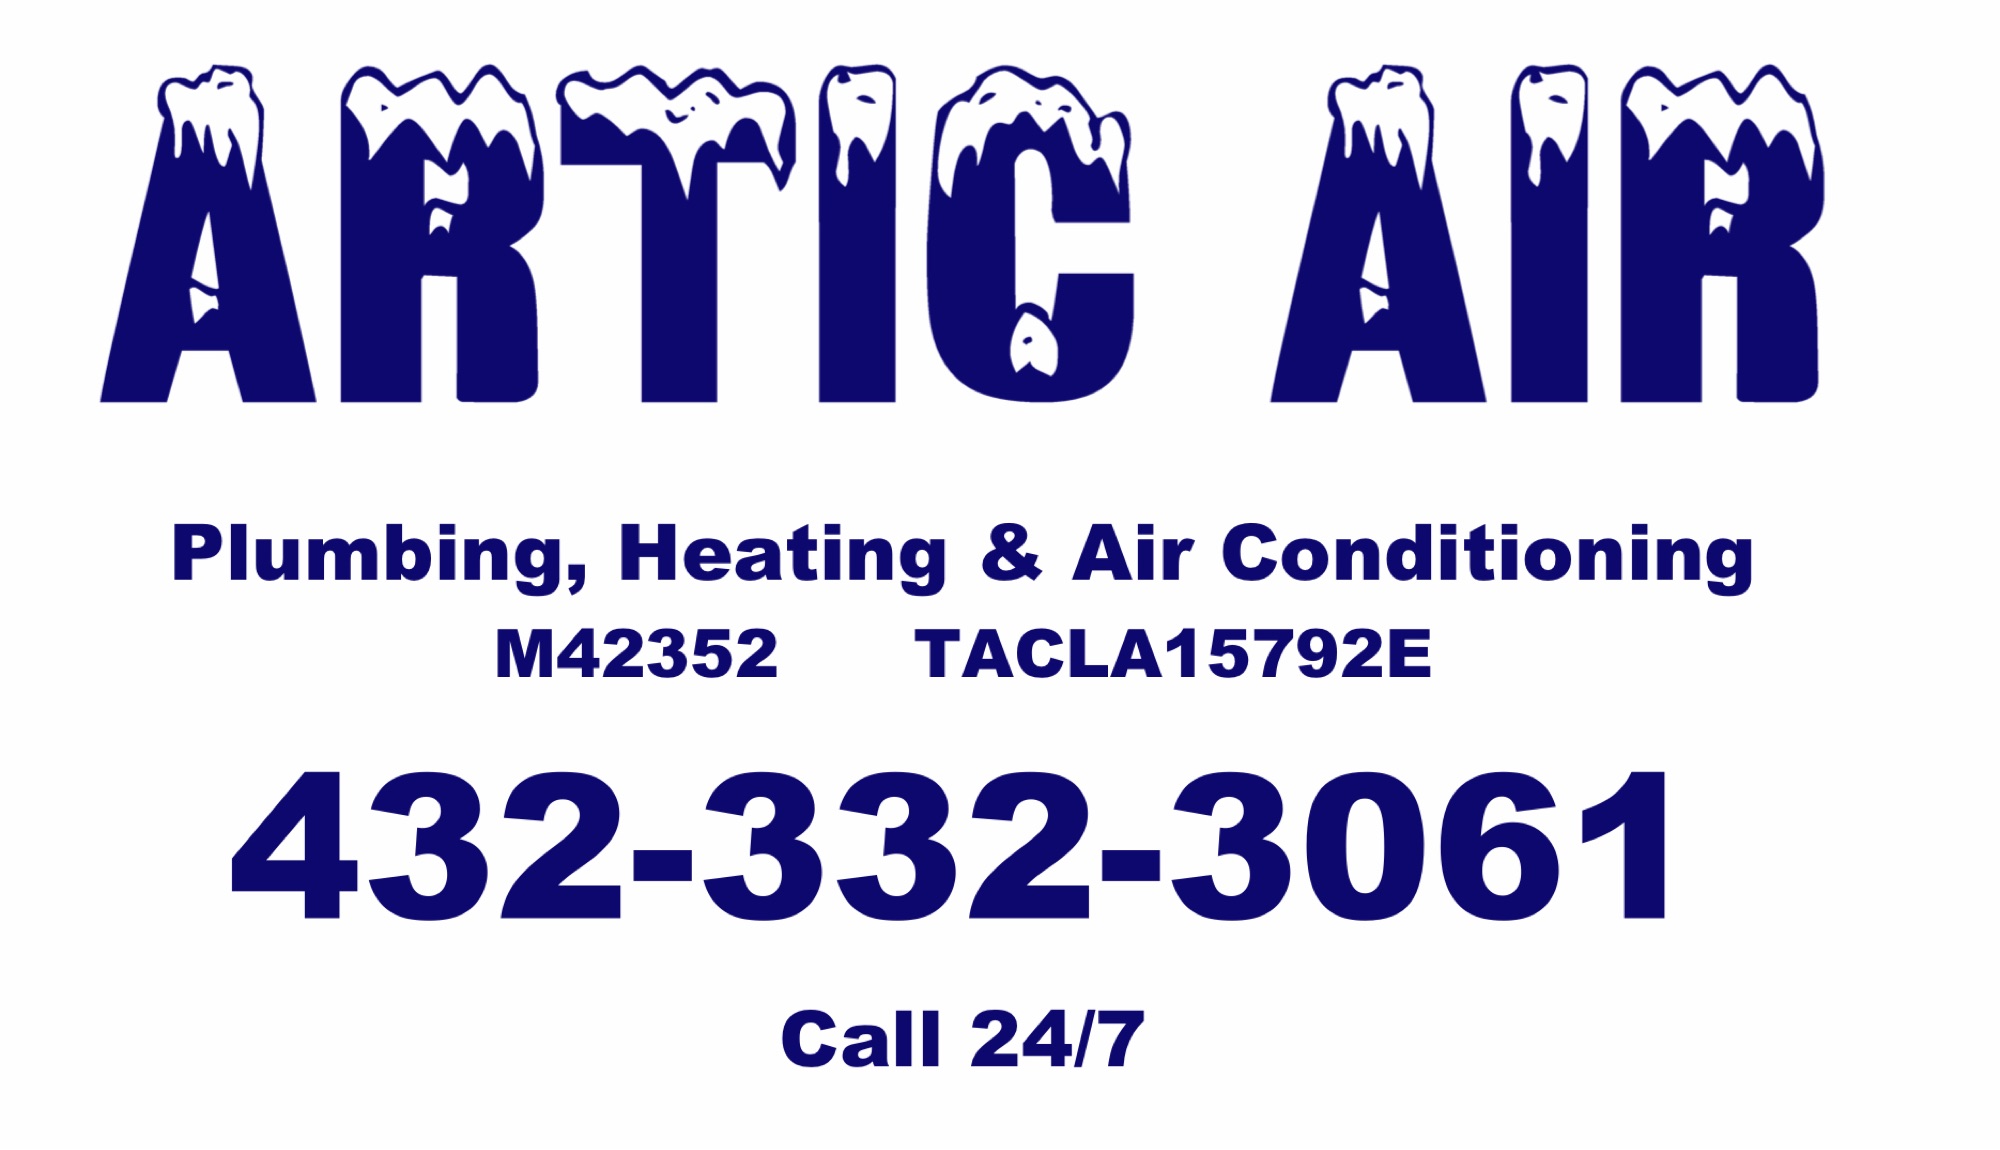 Artic Logo